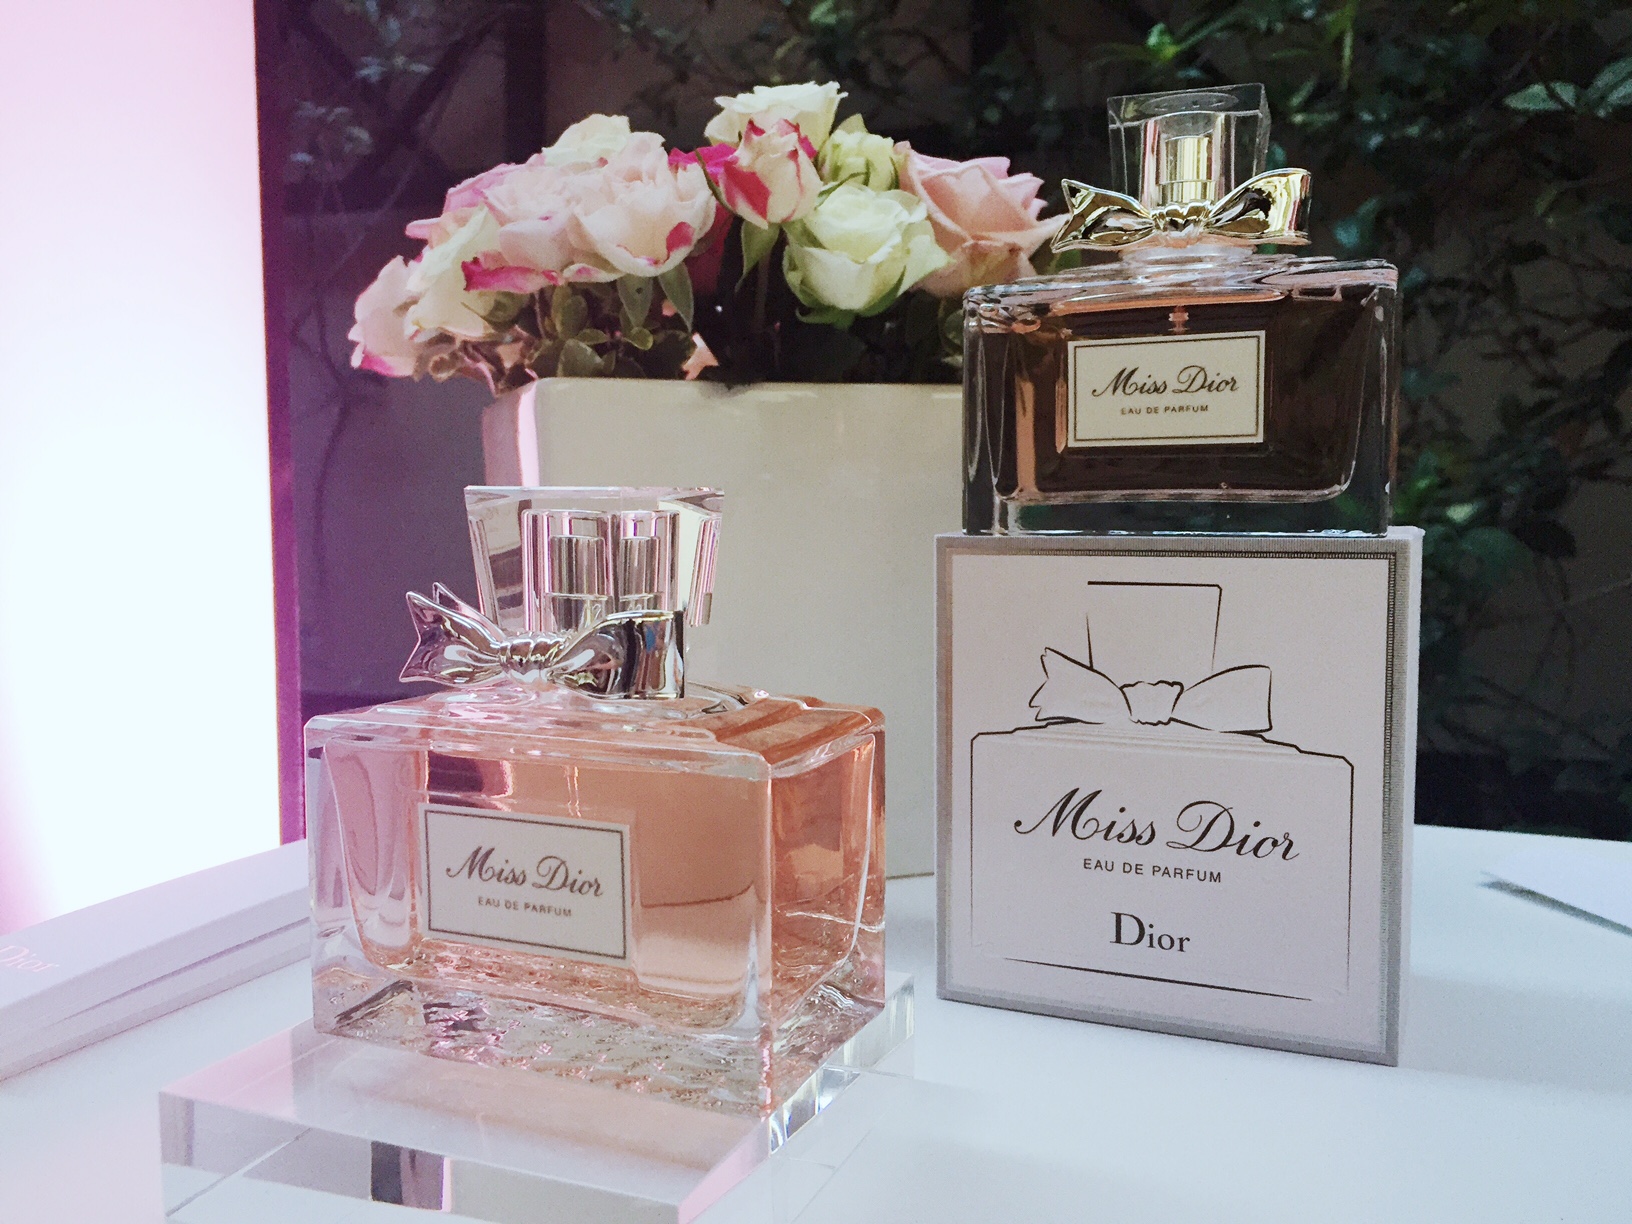 Miss Dior: Una storia di amore e di passione raccontata da Natalie Portman